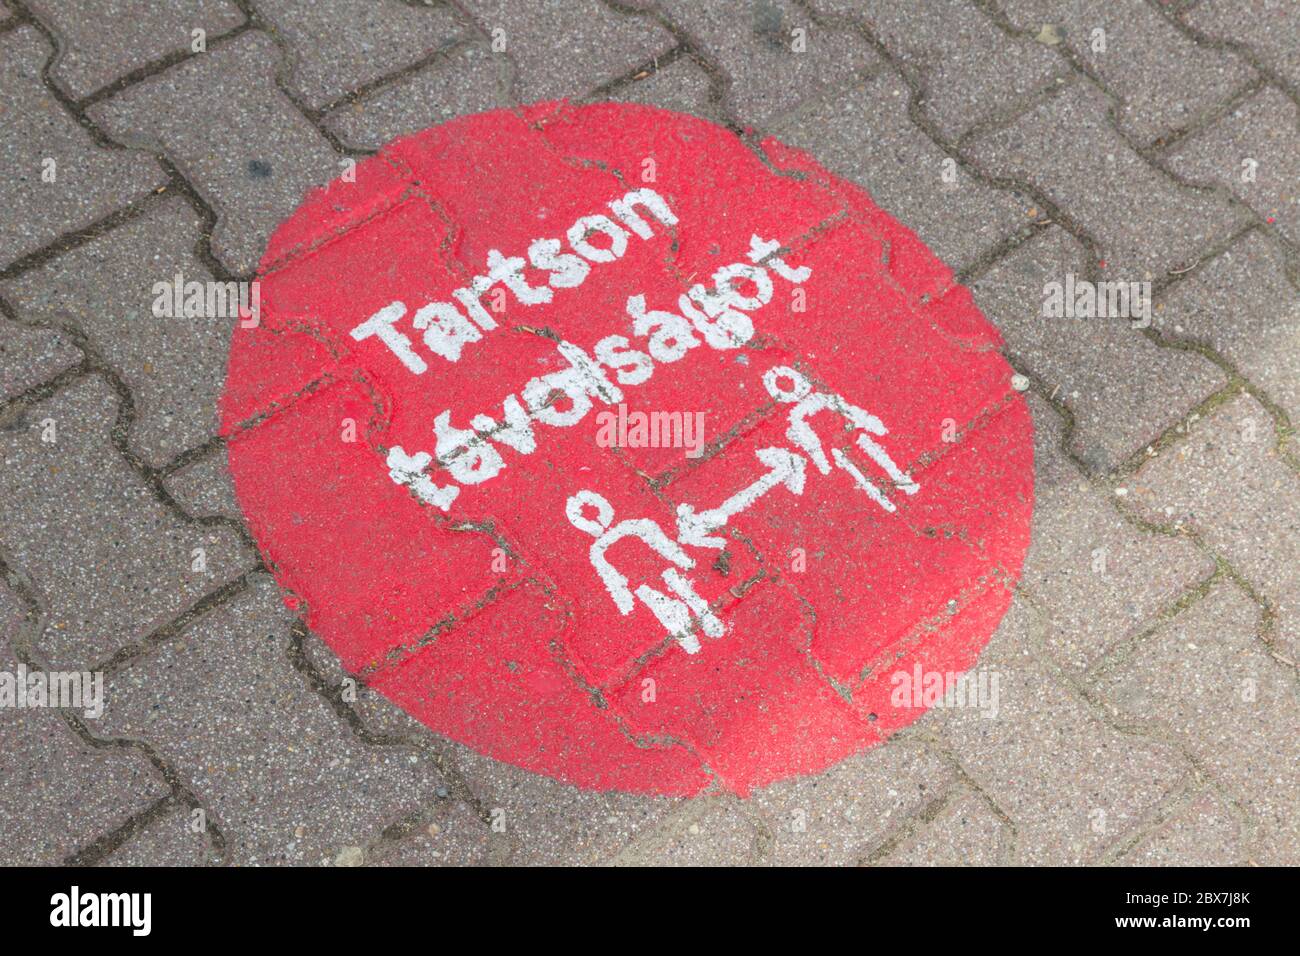 Tartson tavolsagot (keep distance) sign painted on ground at the entrance of Tesco supermarket during covid-19 coronavirus pandemic, Sopron, Hungary Stock Photo